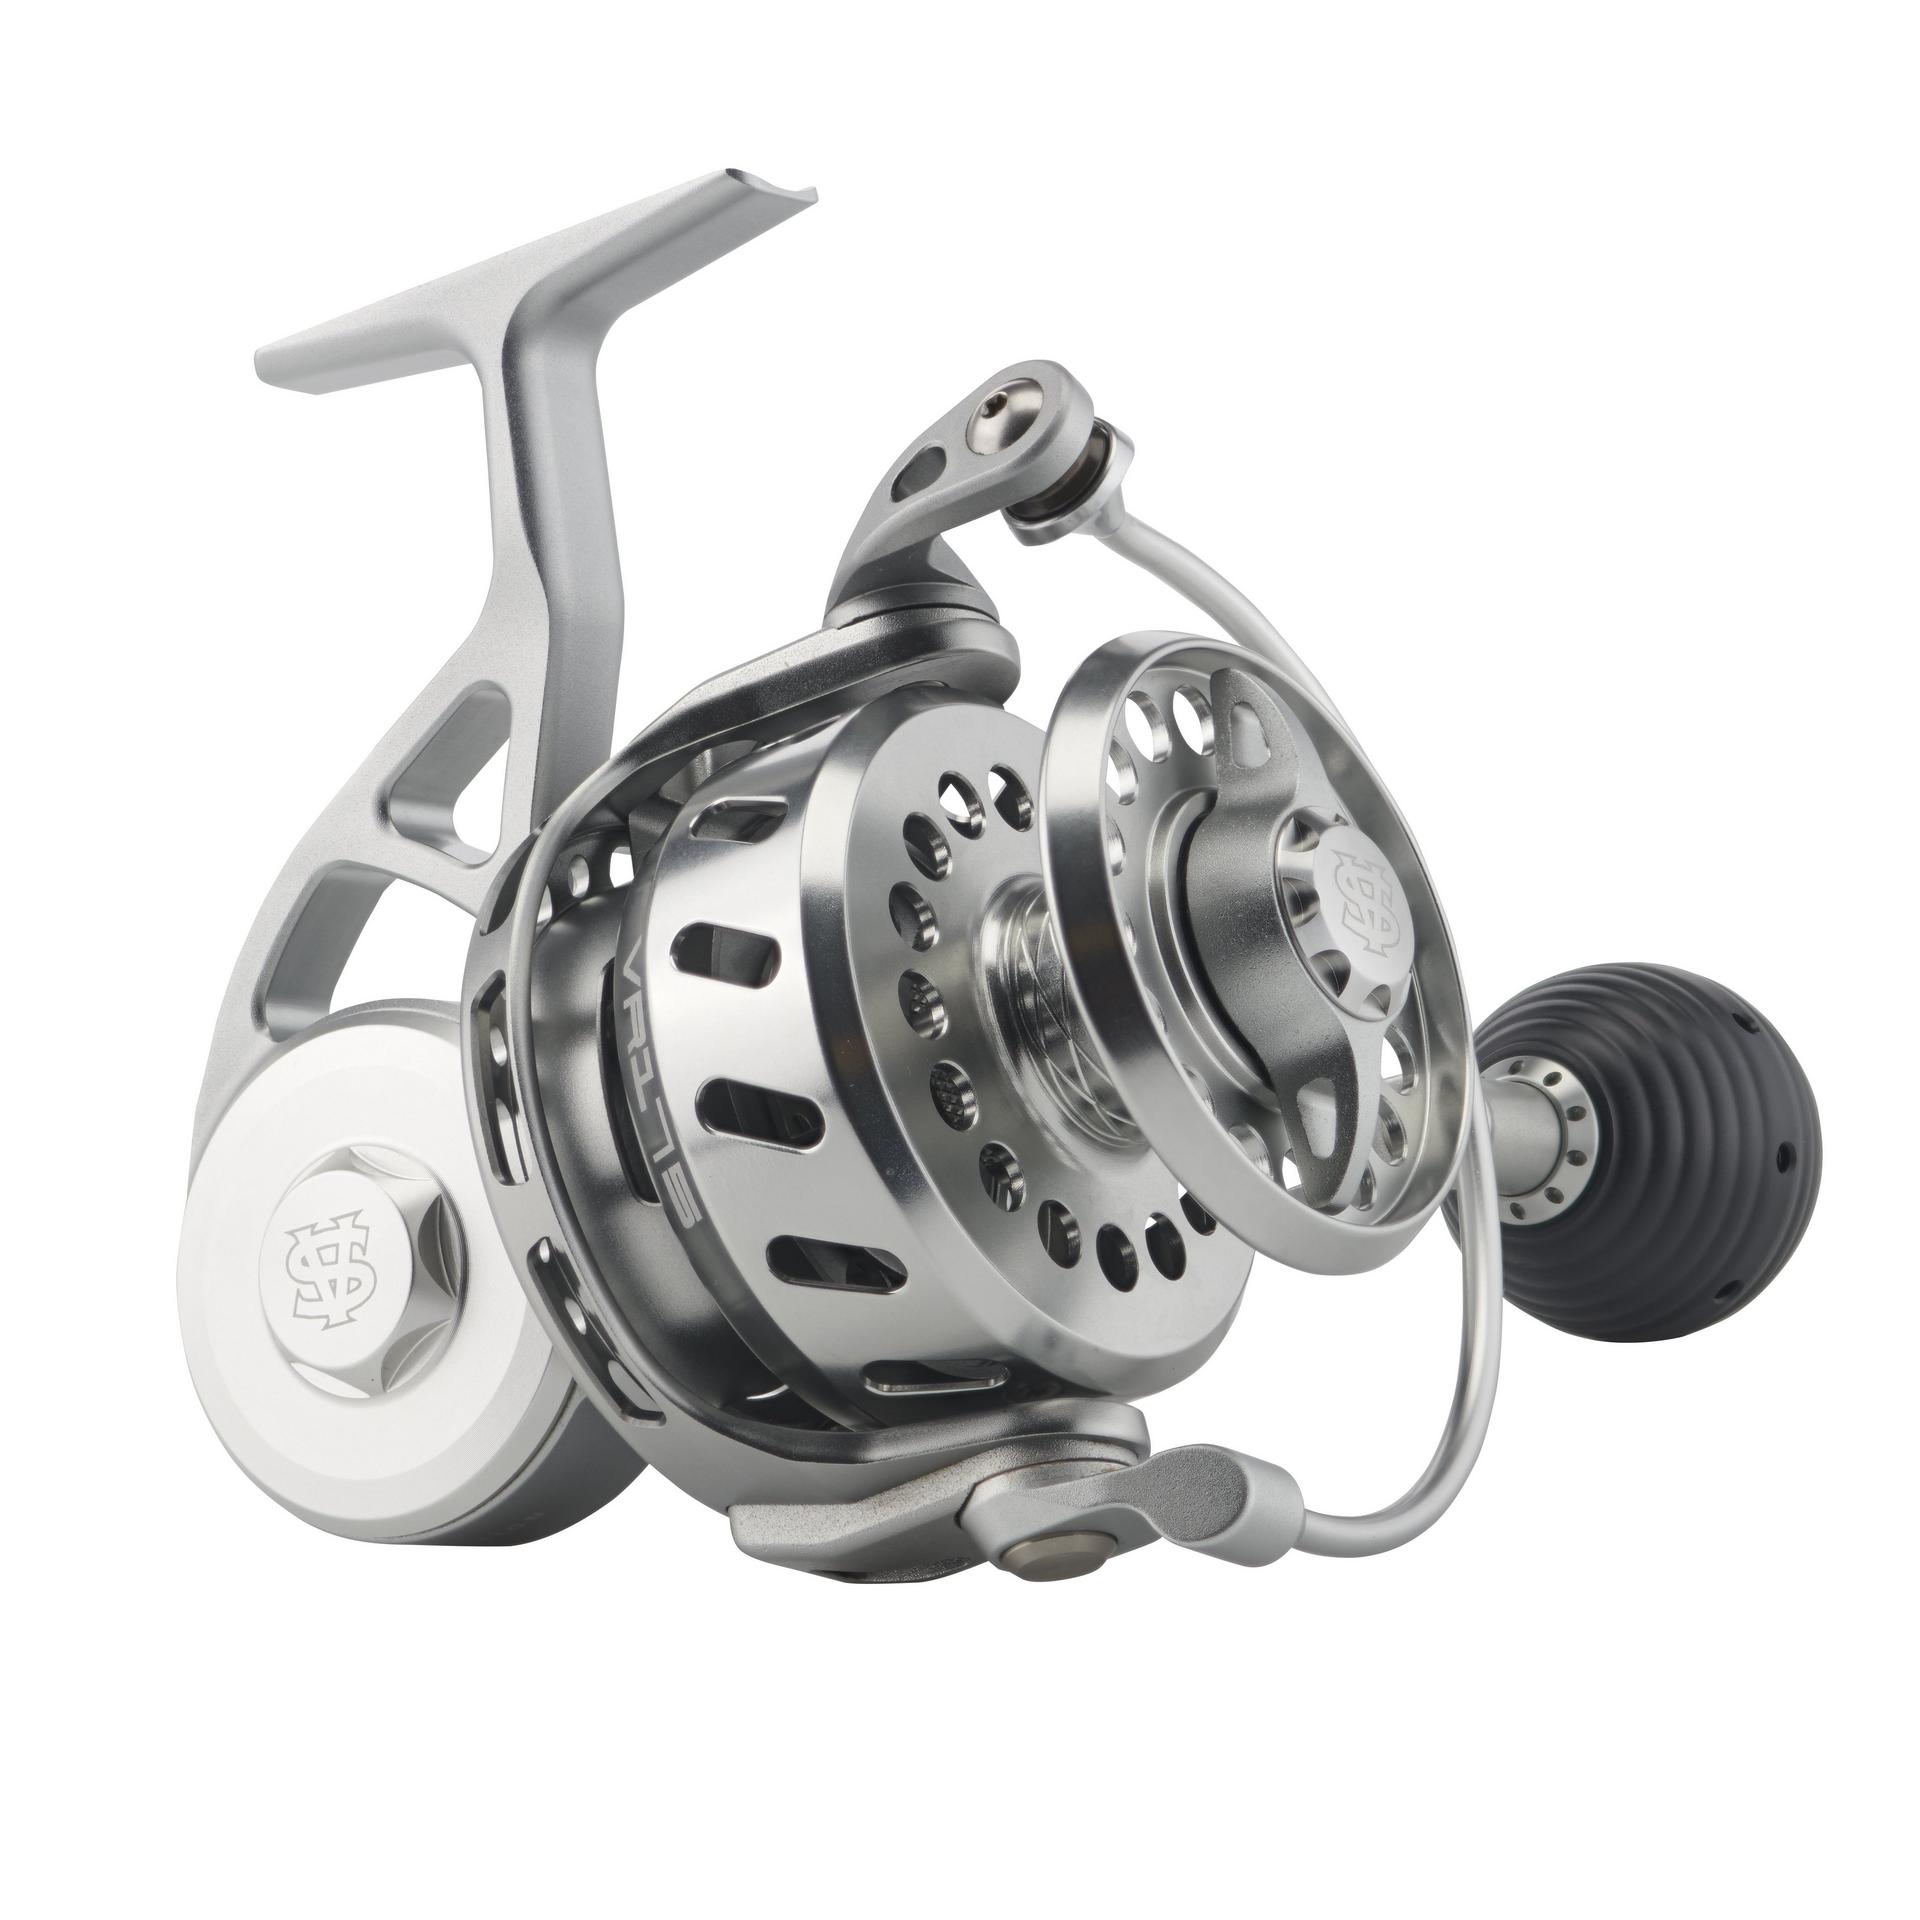 Van Staal VR Series VR150 Silver Bailed Fixed Spool Spinning Fishing Reel  854692001643